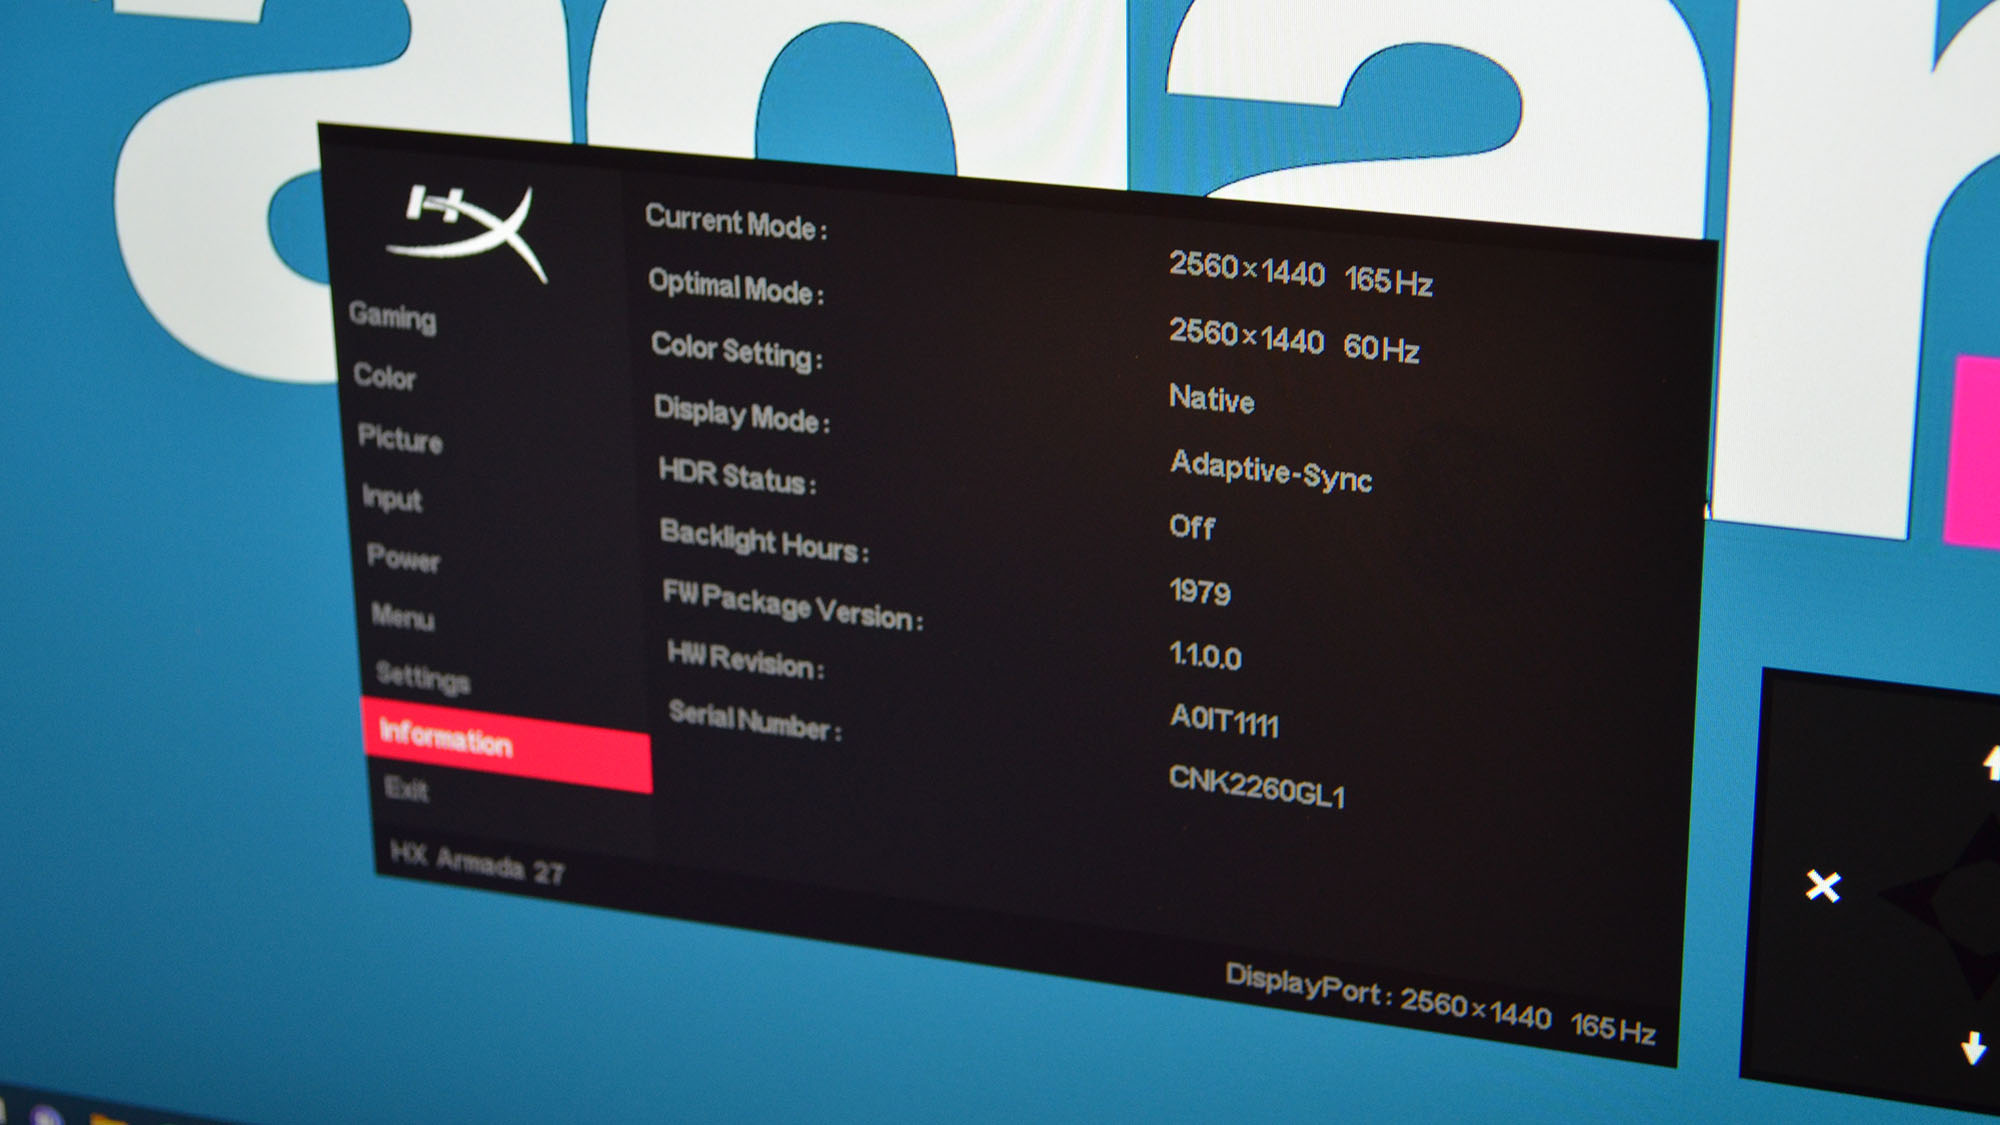 The settings menu on the HyperX Armada 27